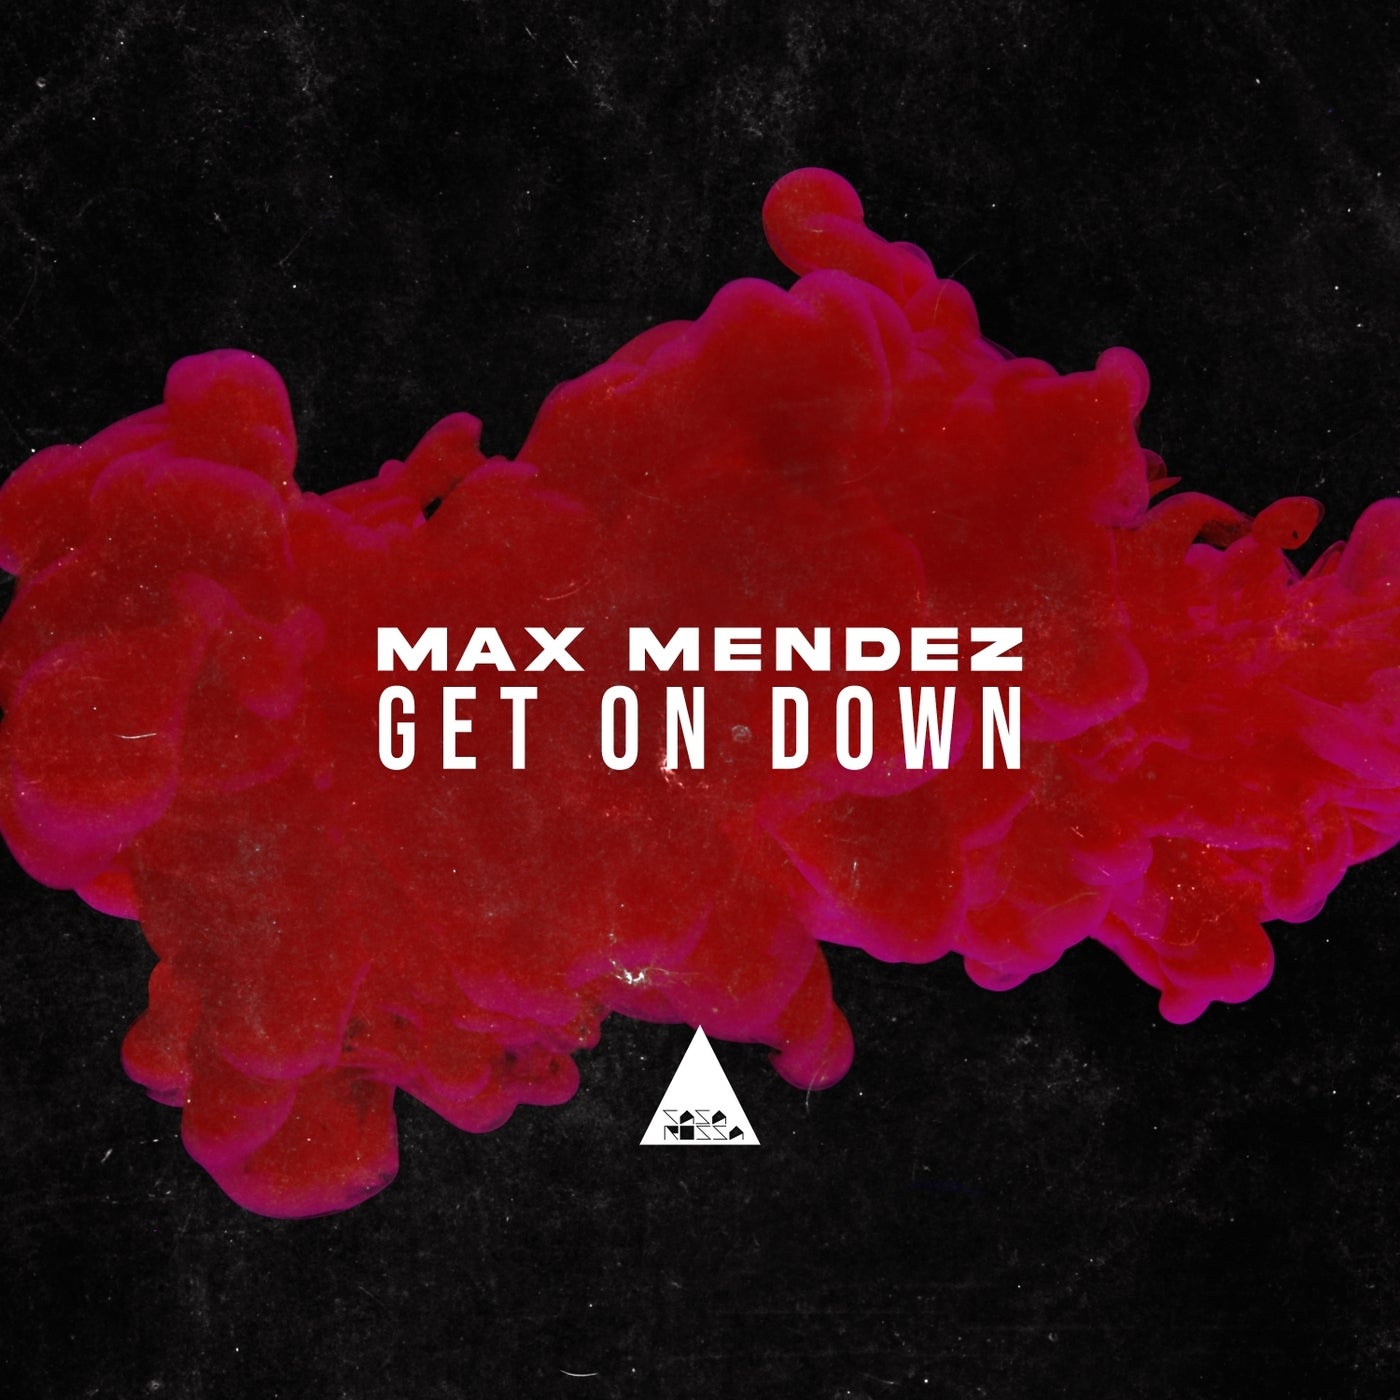 Cover - Max Mendez - Get on Down (Original Mix)